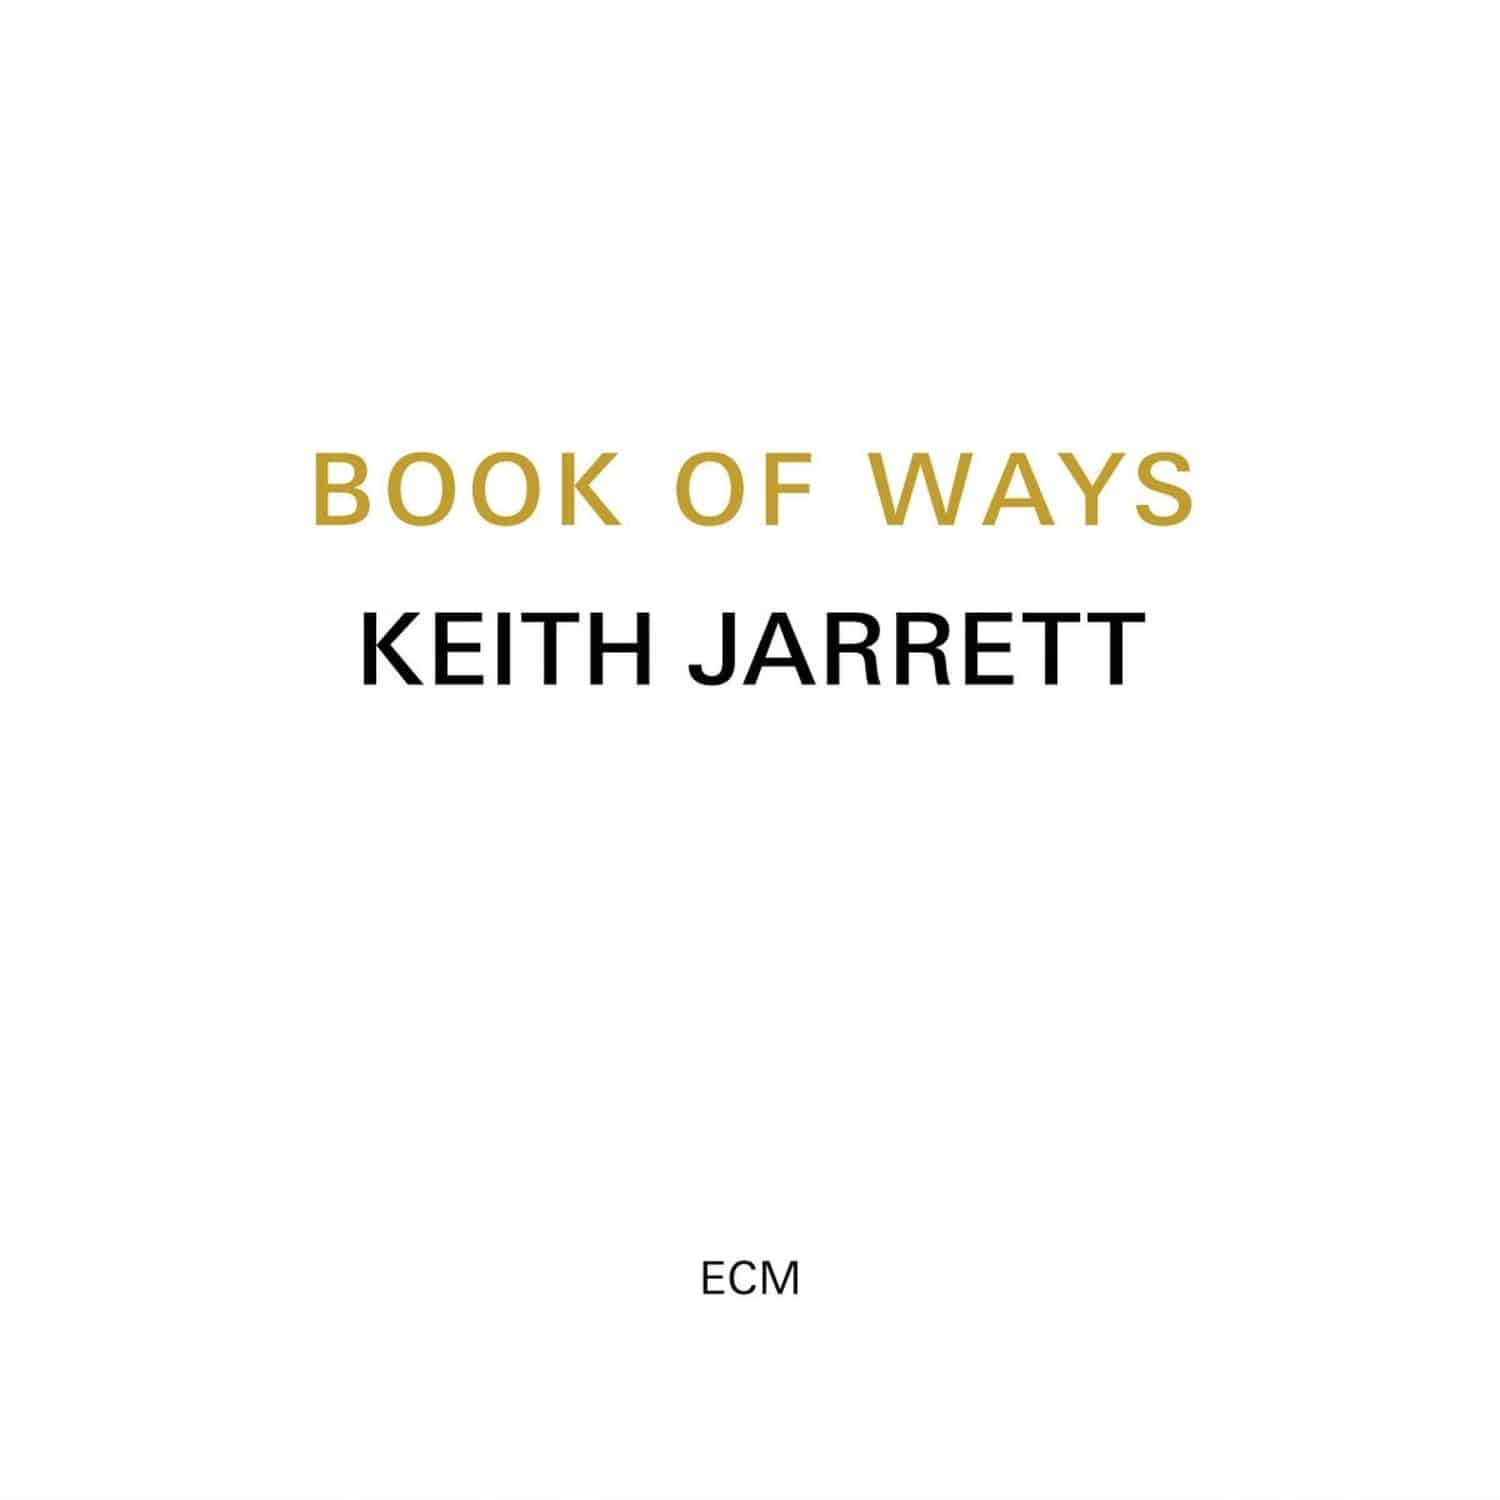 Keith Jarrett - BOOK OF WAYS 